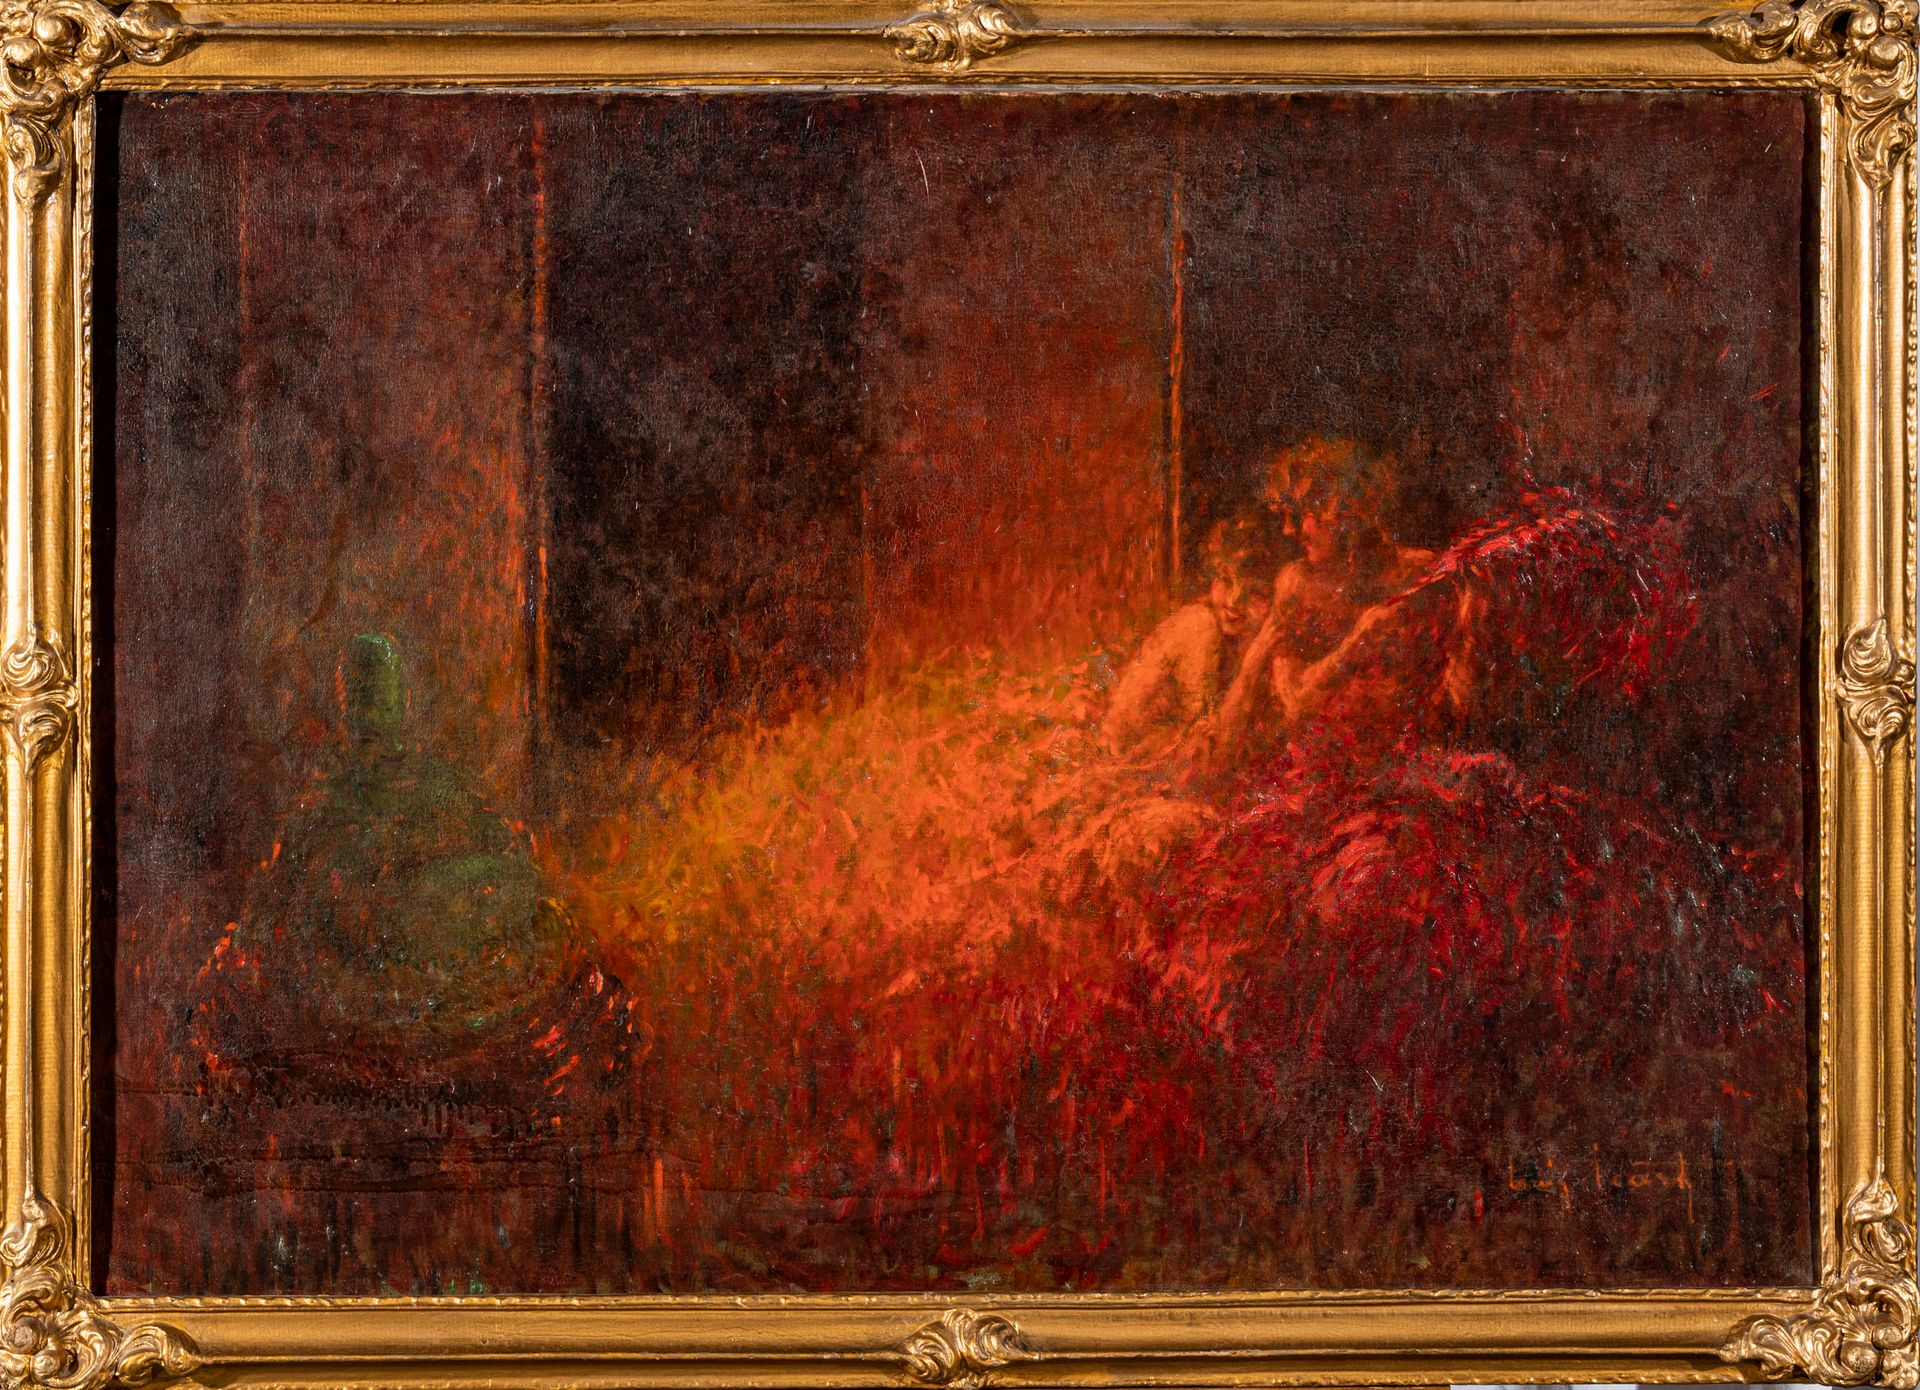 LOUIS ICART (1888-1930) 路易斯-伊卡尔特(1888-1930)

舞蹈家和绿菩萨

布面油画，右下角有签名

80 x 115厘米